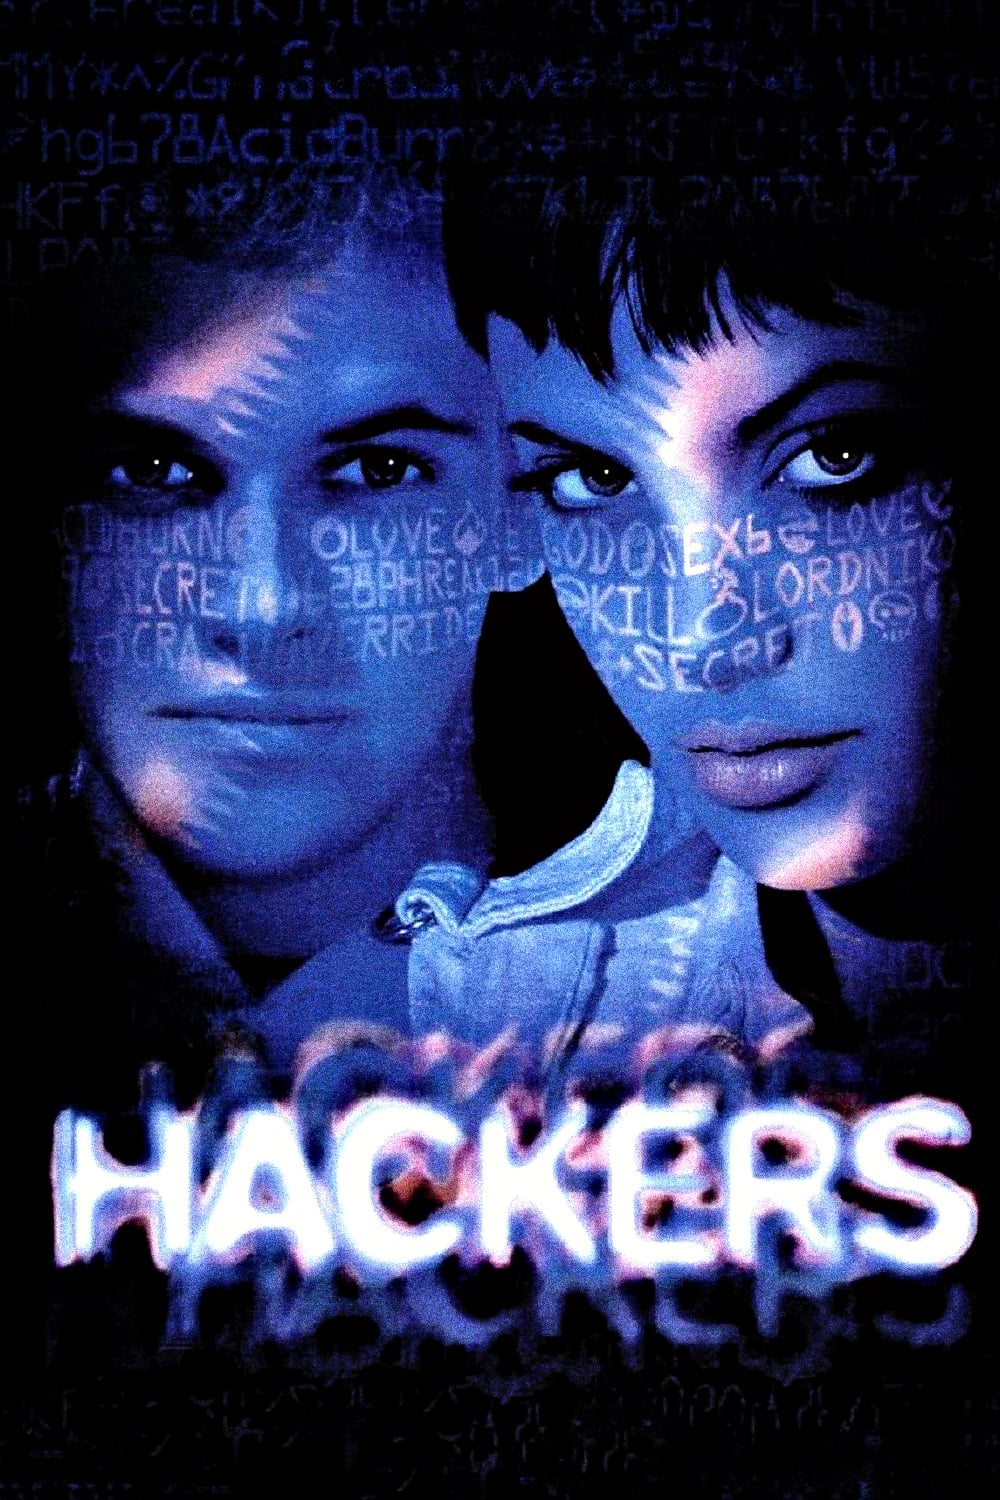 Hackers: Piratas de Computador